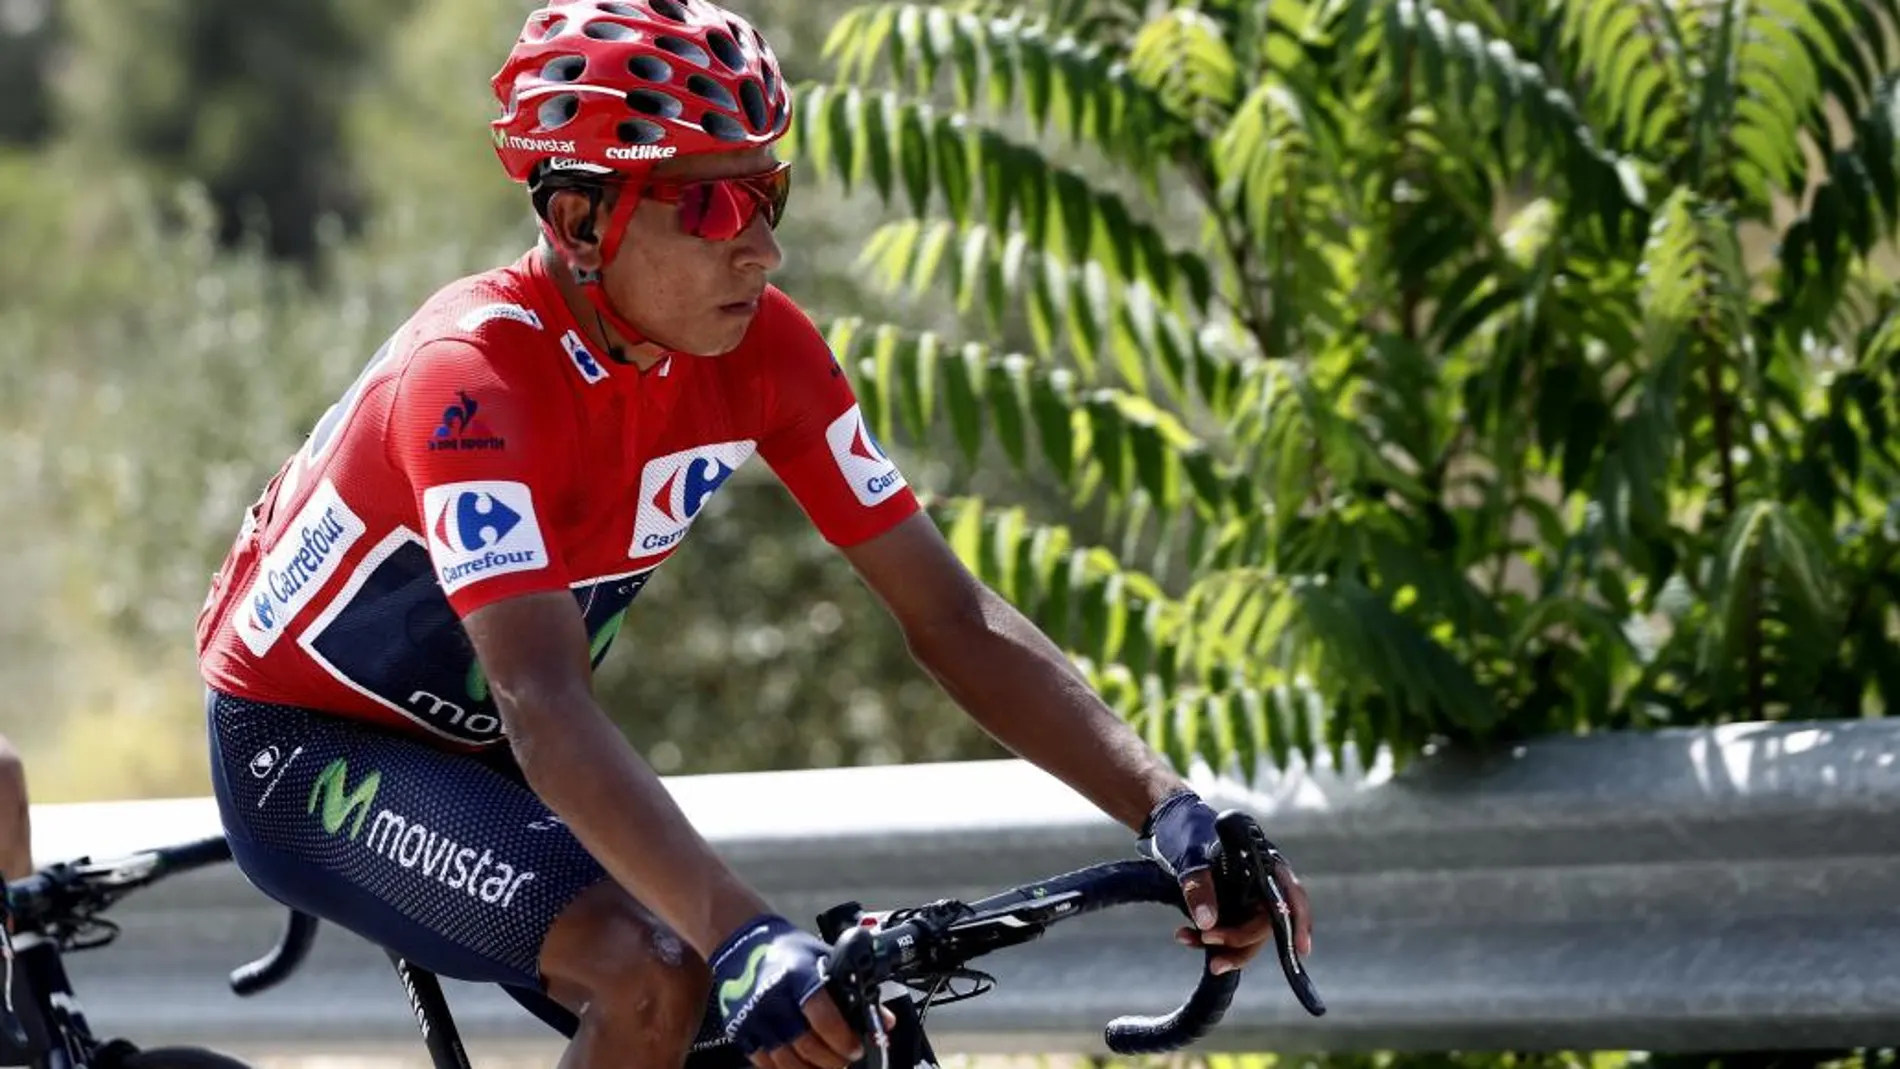 El ciclista colombiano del equipo Movistar, Nairo Quitana